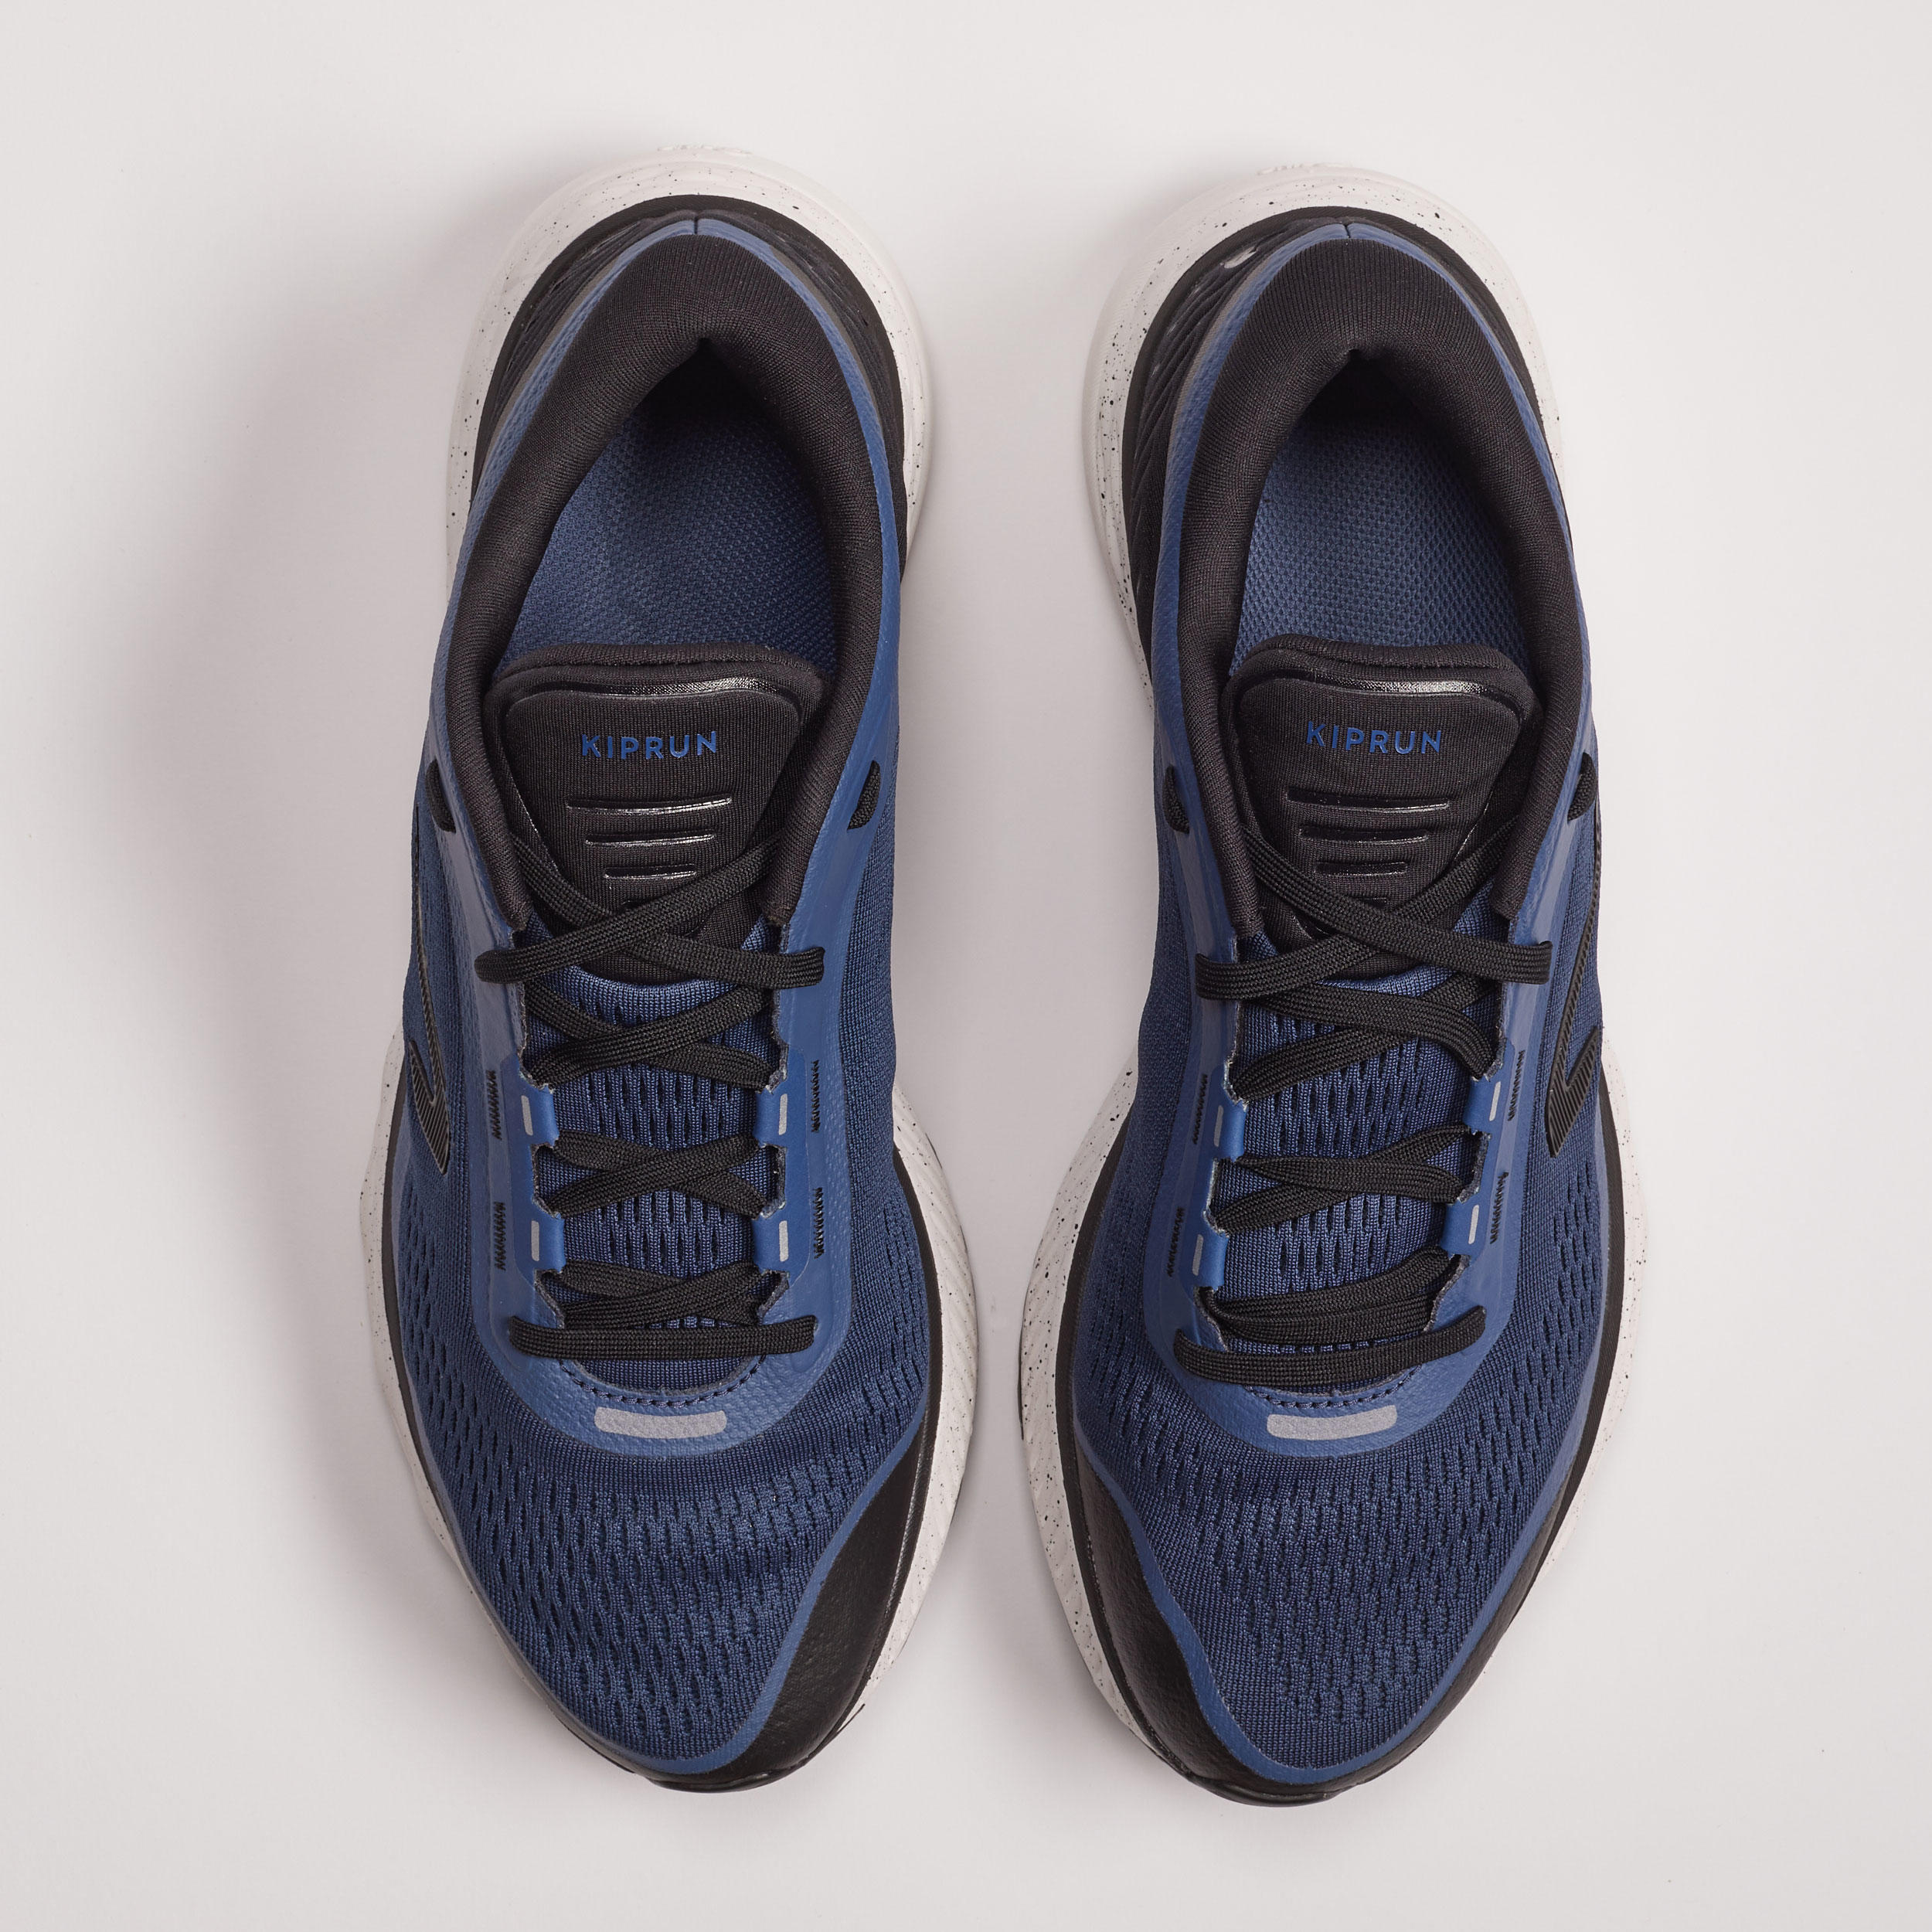 Kiprun KS500 Men's Running Shoes - slate blue - Limited Edition 5/9